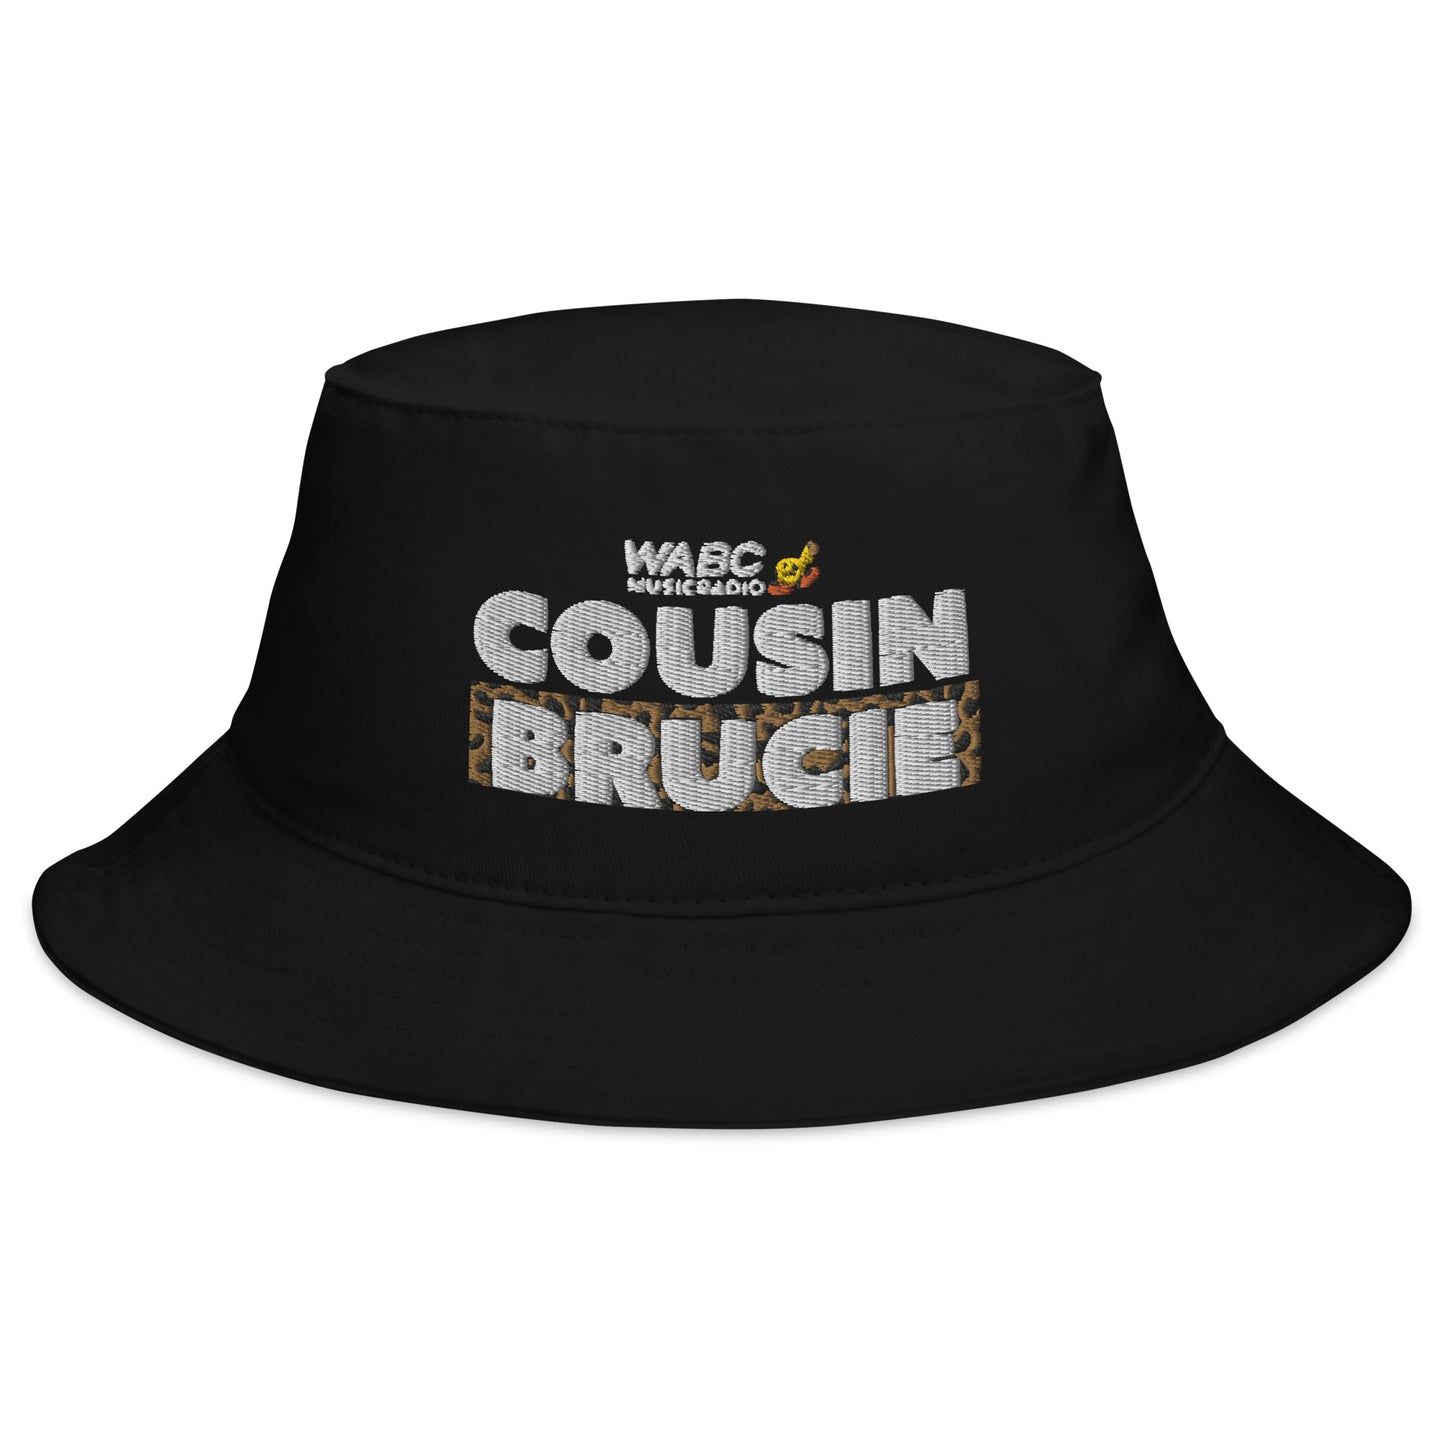 Cousin Brucie WABC Music Radio Bucket Hat - Black Hat